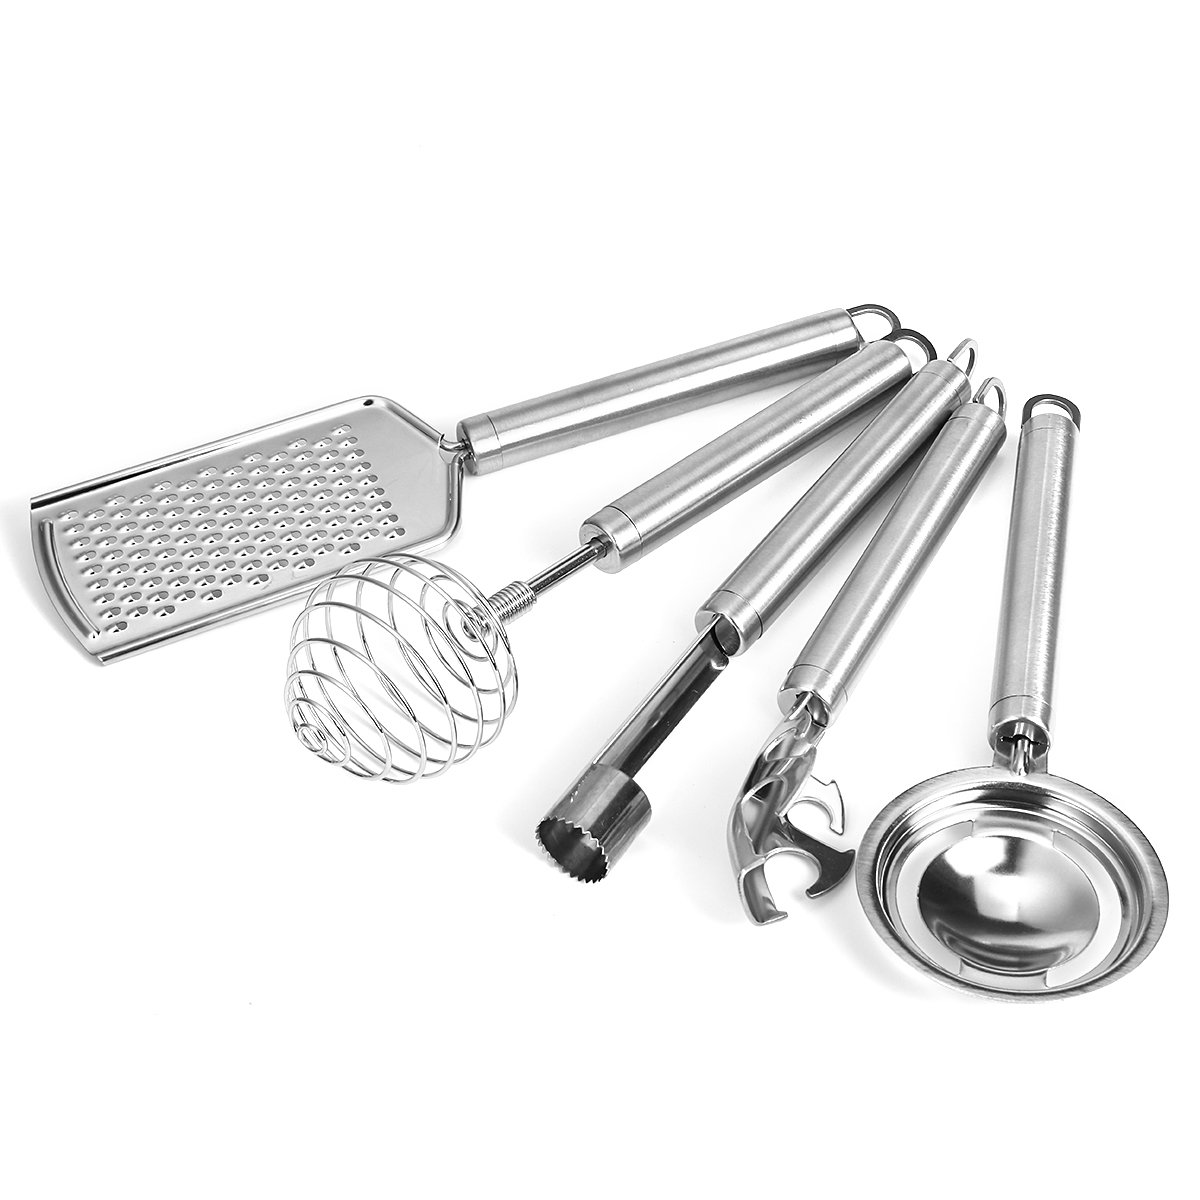 18pcs-Kitchen-Utensils-Set-Stainless-Steel-Non-Stick-Silica-Gel-Cooking-Tools-Kit-1706786-6